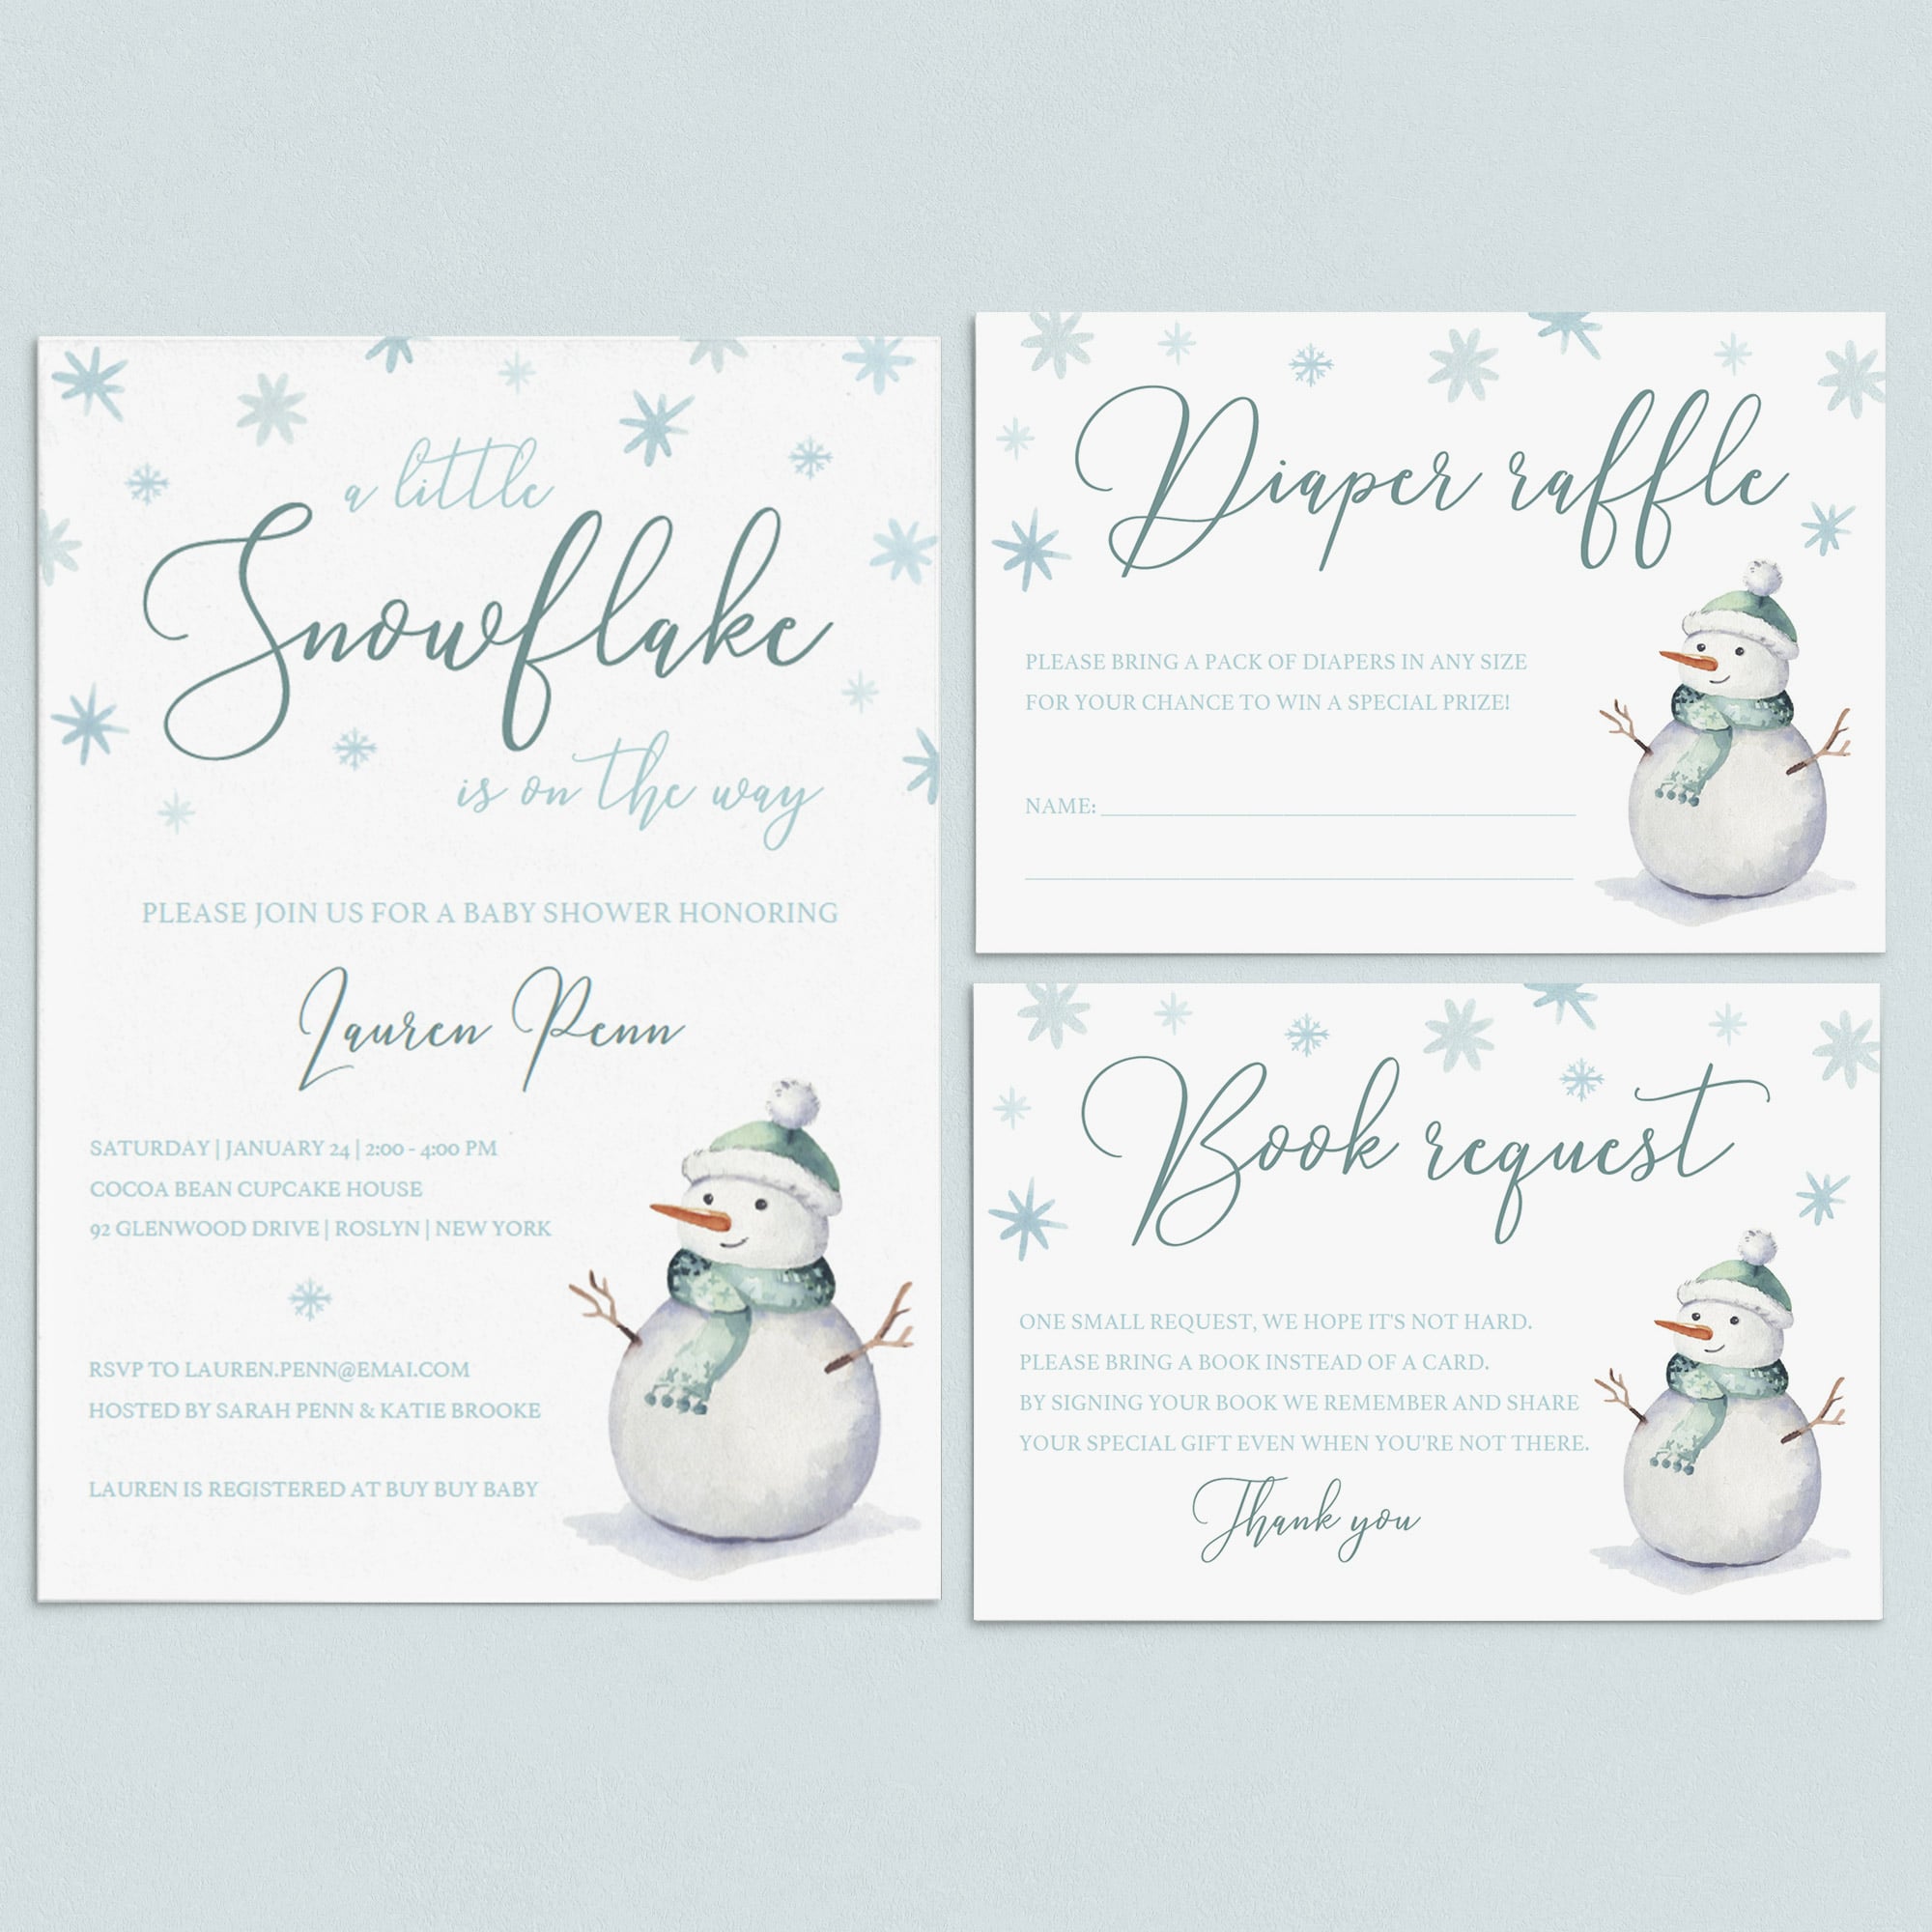 Winter wonderland baby shower invitation kit templates by LittleSizzle